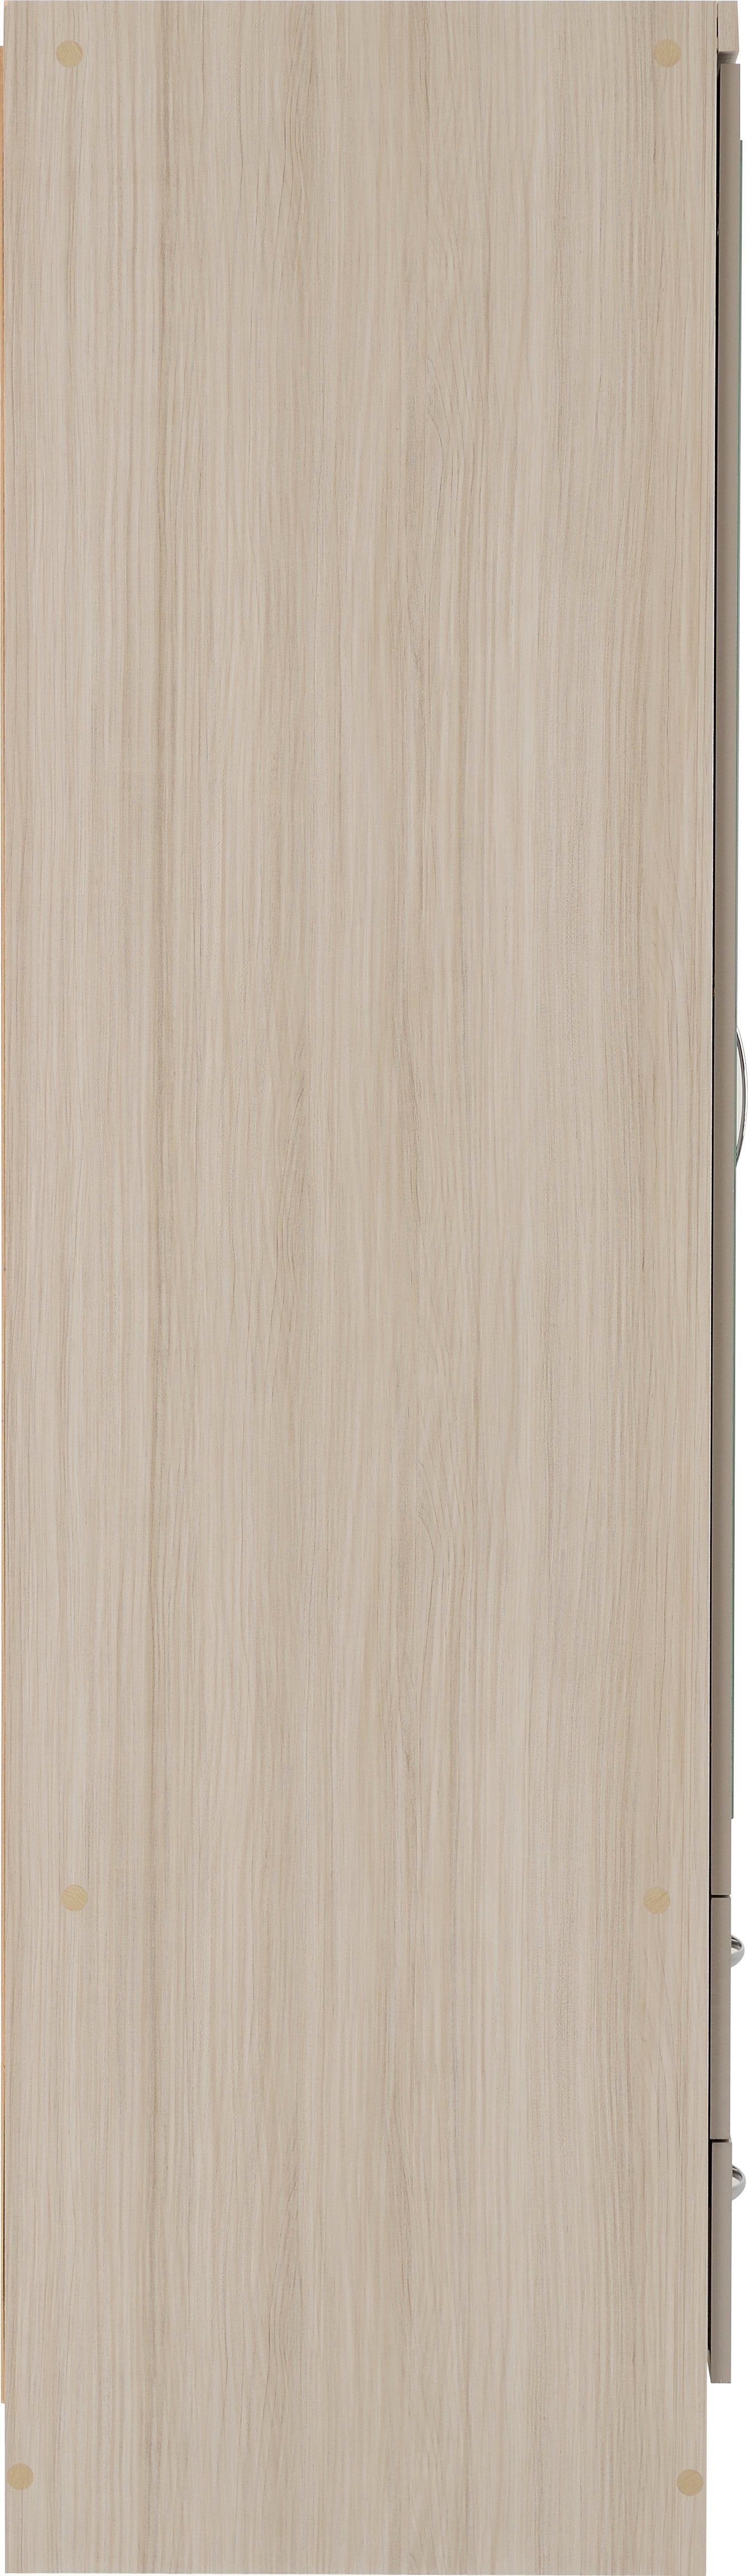 Nevada 3 Door 2 Drawer Mirrored Wardrobe Oyster Gloss/Light Oak Effect Veneer